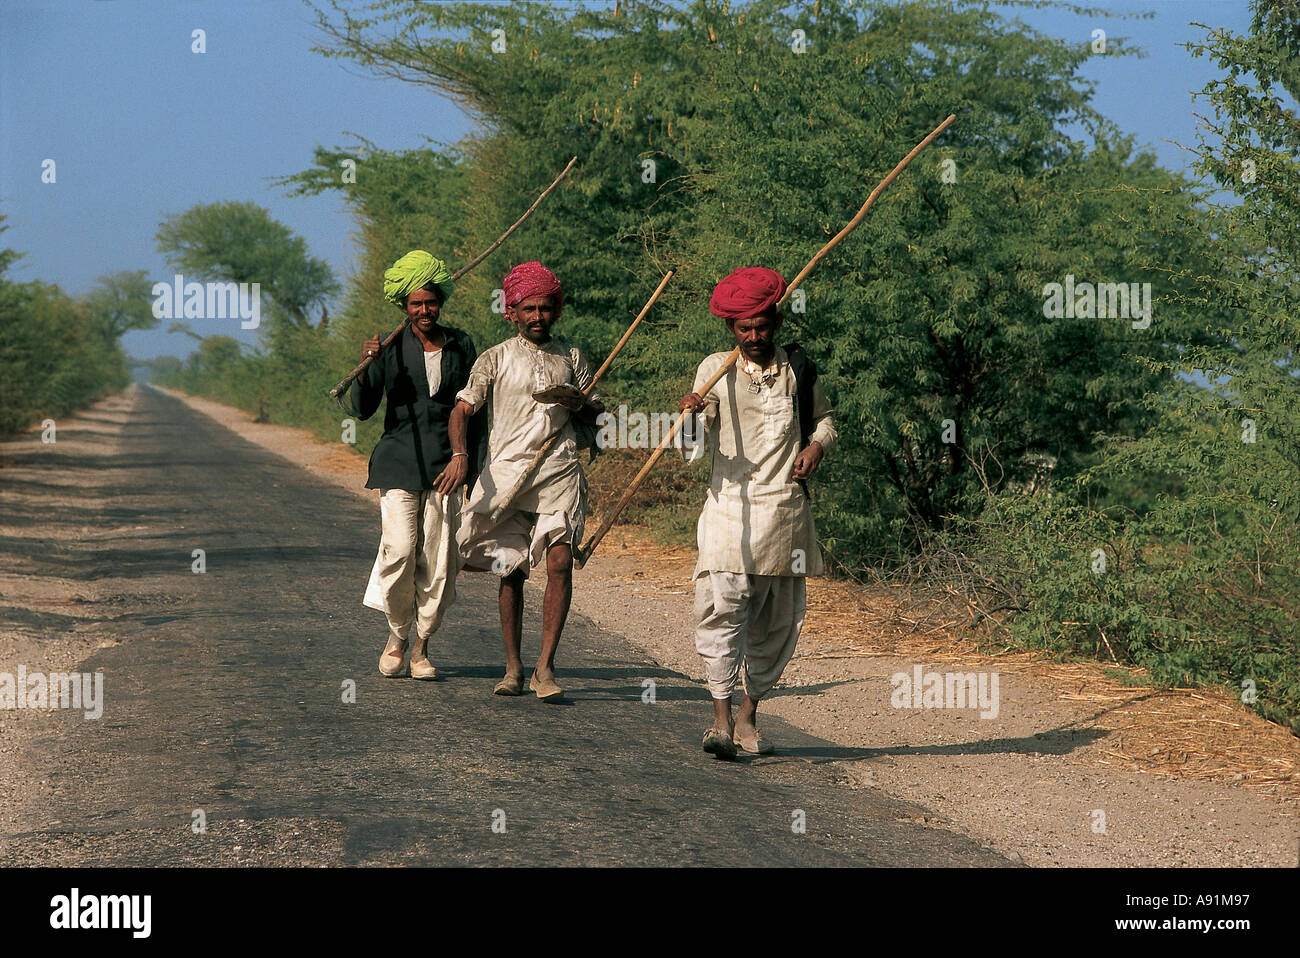 NMJ99776 Three Villagers Walking On Road Rajasthan India Stock Photo